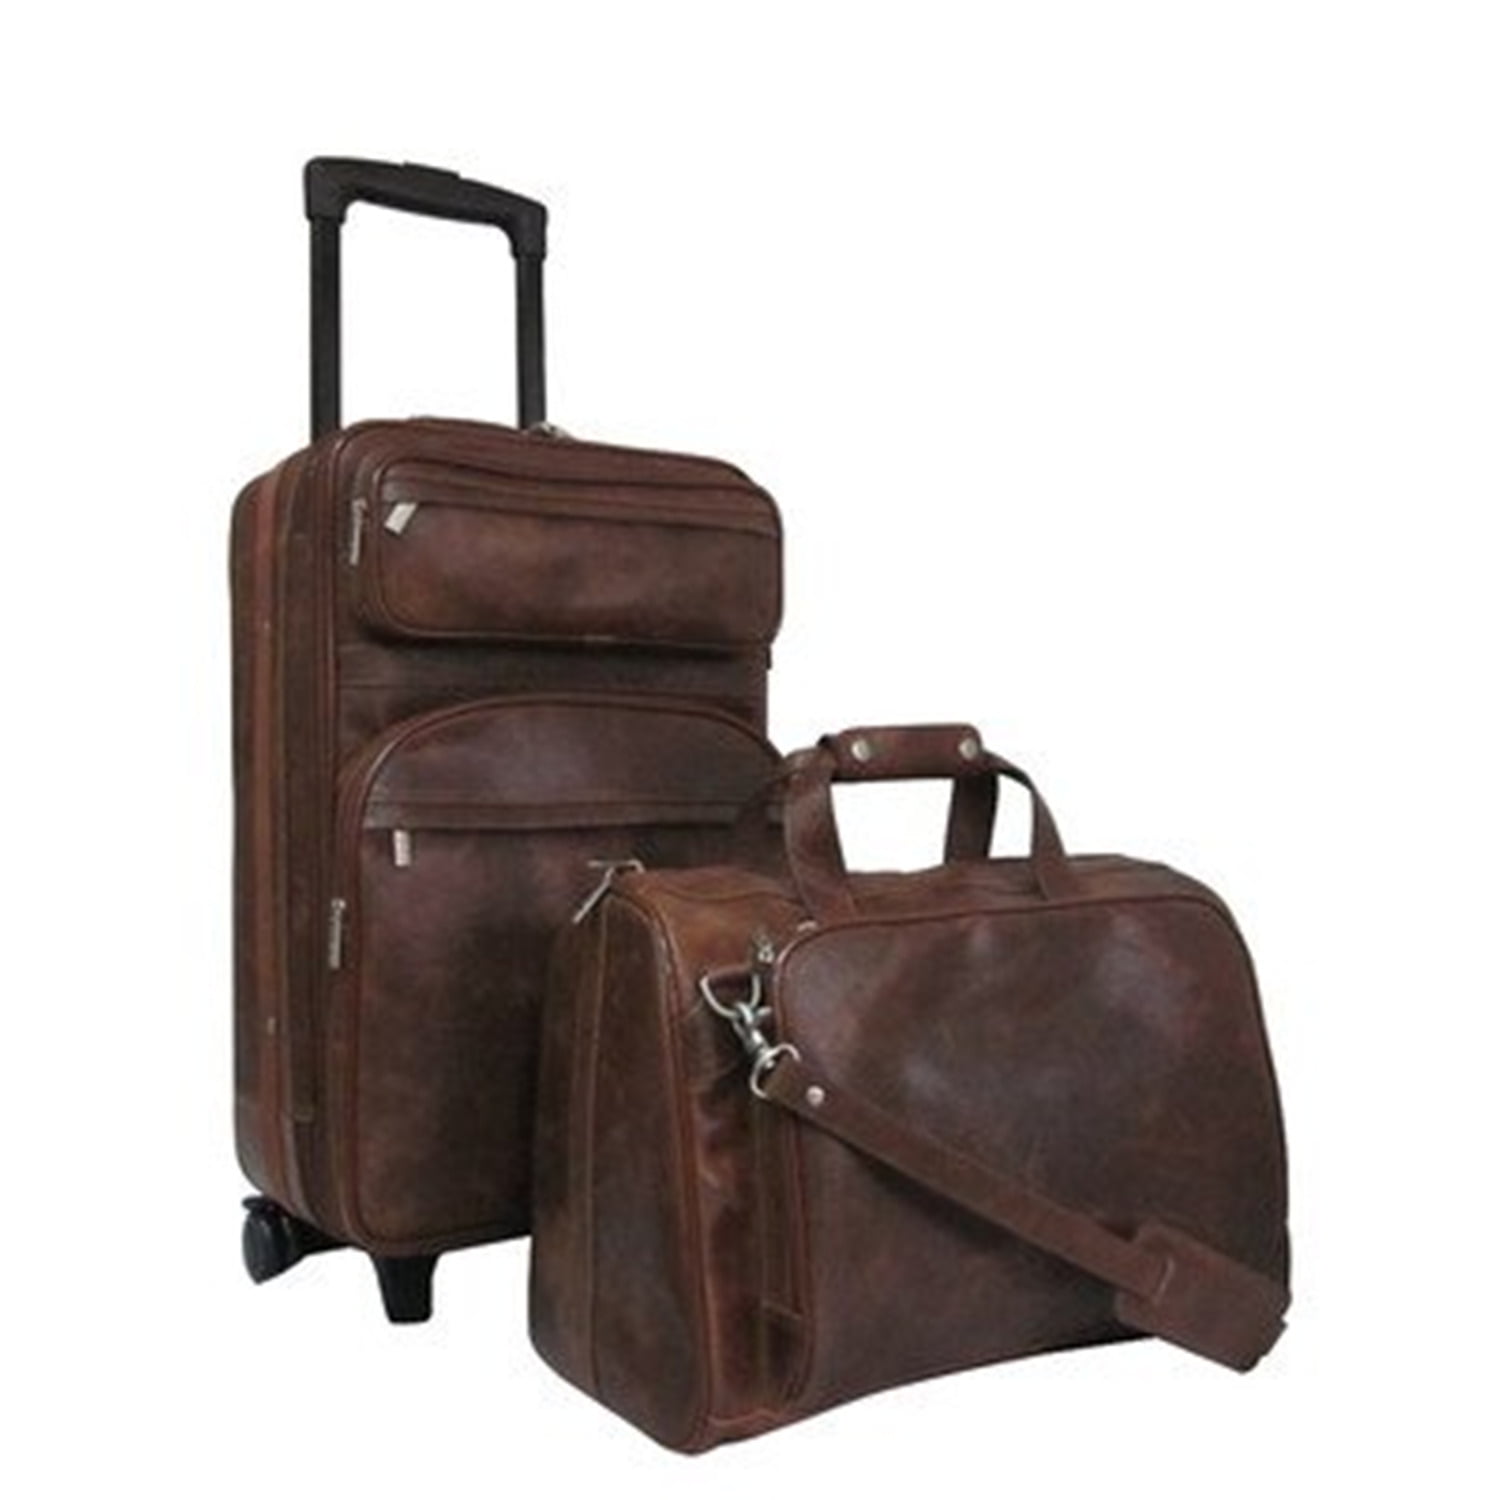 Amerileather Leather 2-Piece Luggage Set - Walmart.com